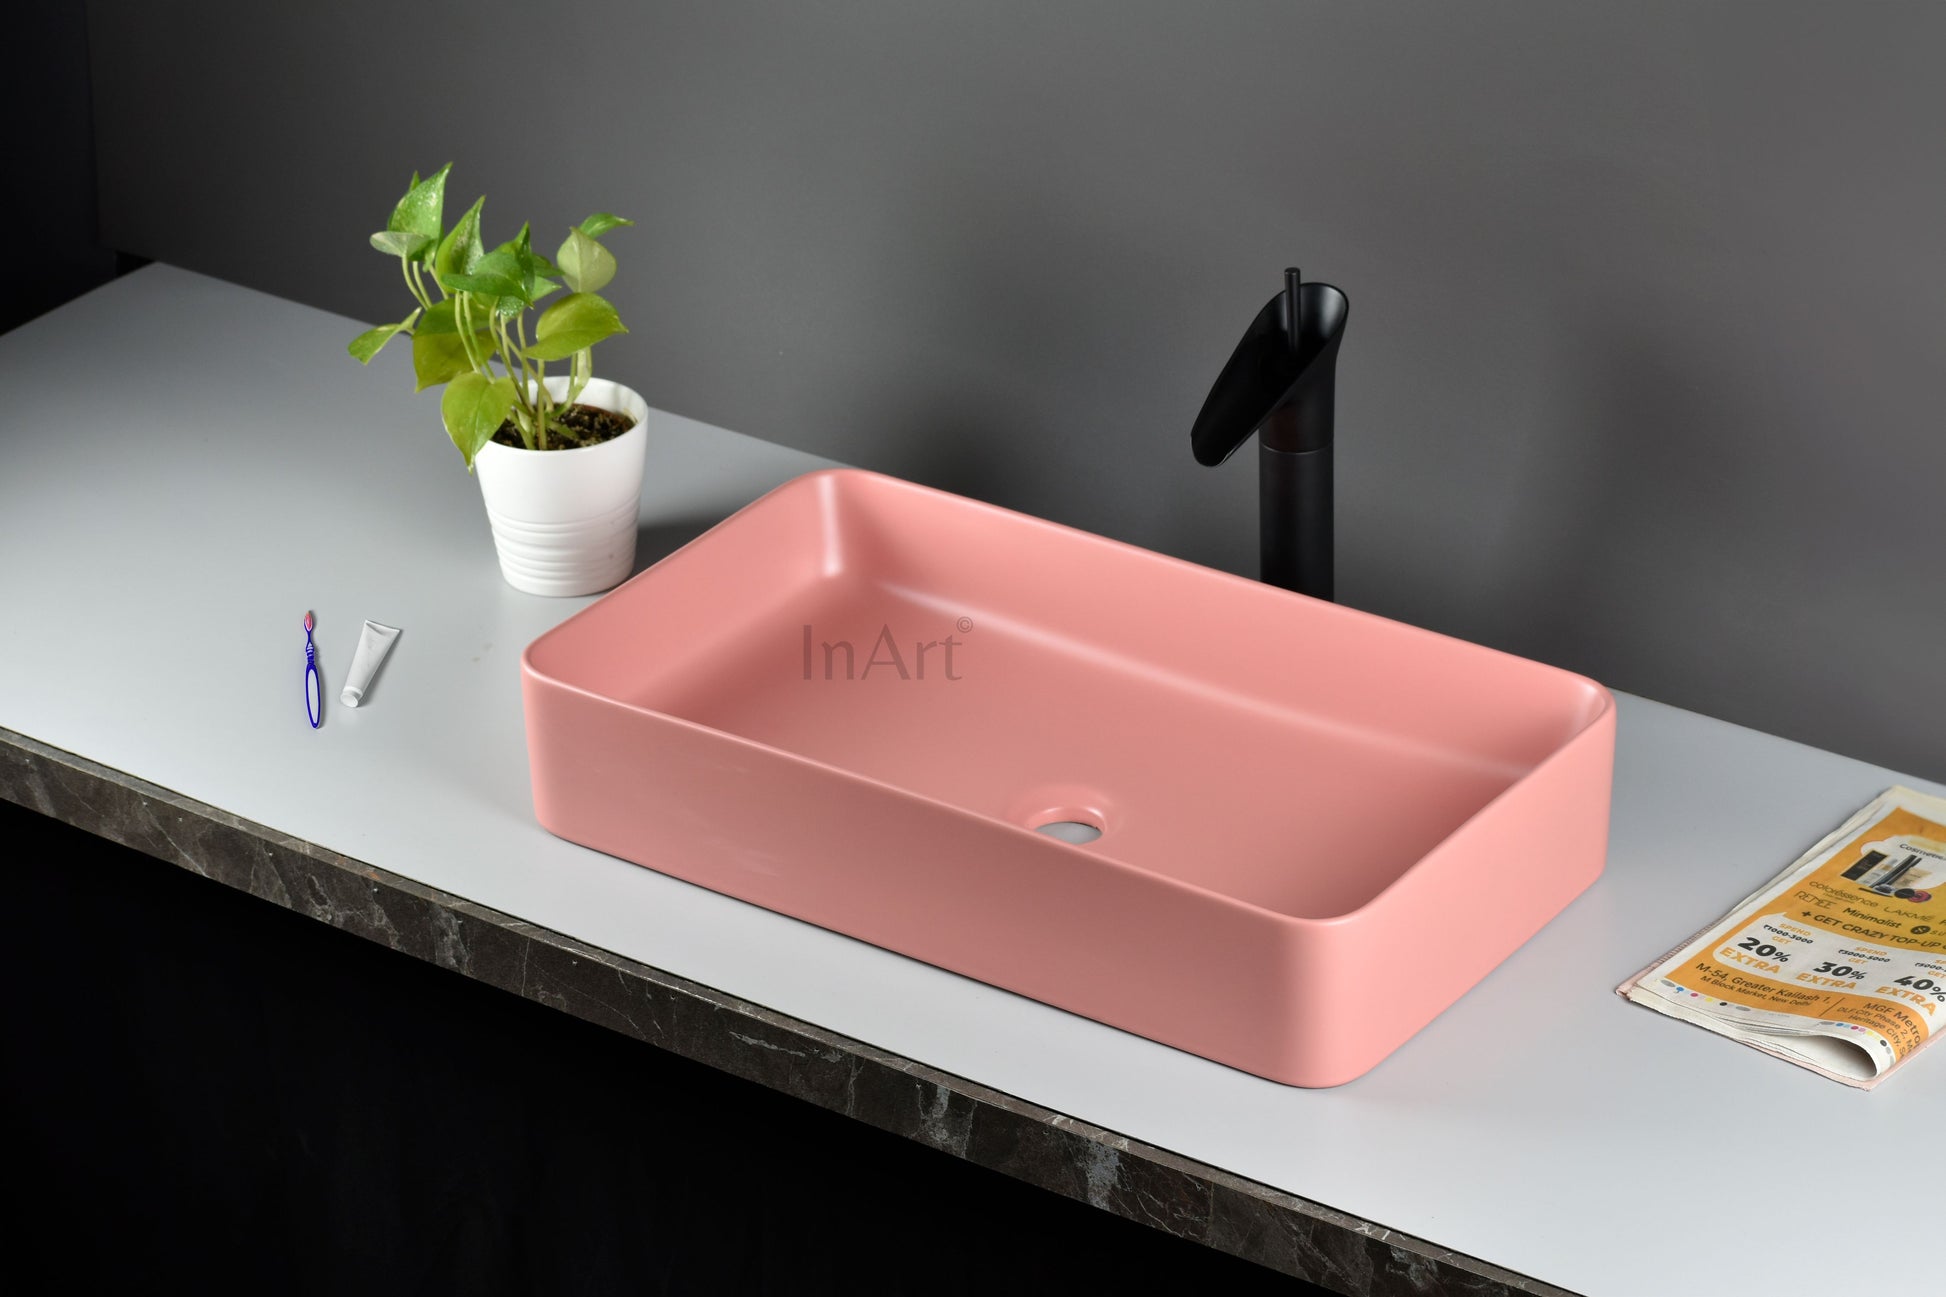 InArt Wash Basin Designer Counter Top Bathroom Sink - Vanity Wash Basin for Bathroom, Table Top Wash Basin 62 x 35 x 12 cm Matt Pink DW271 - InArt-Studio